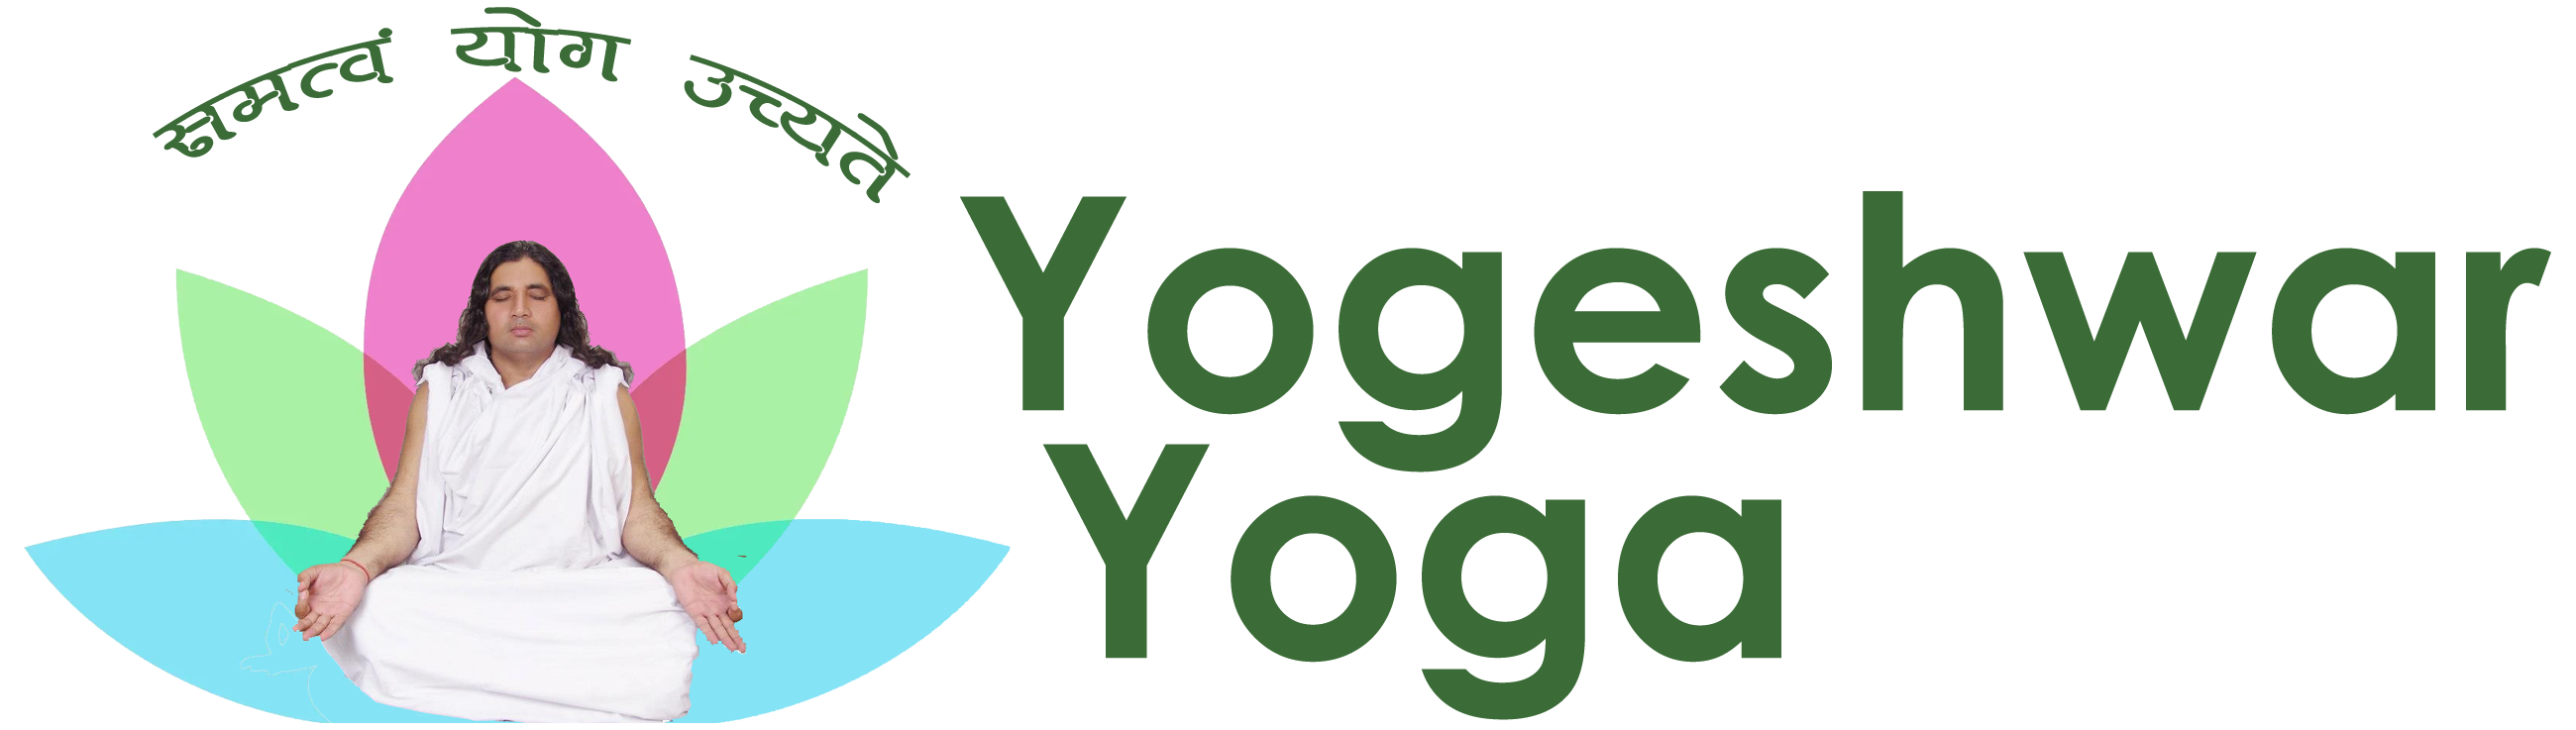 Yogeshwar Yoga : Yoga Training | Best Yoga Traning in India | Yoga ...